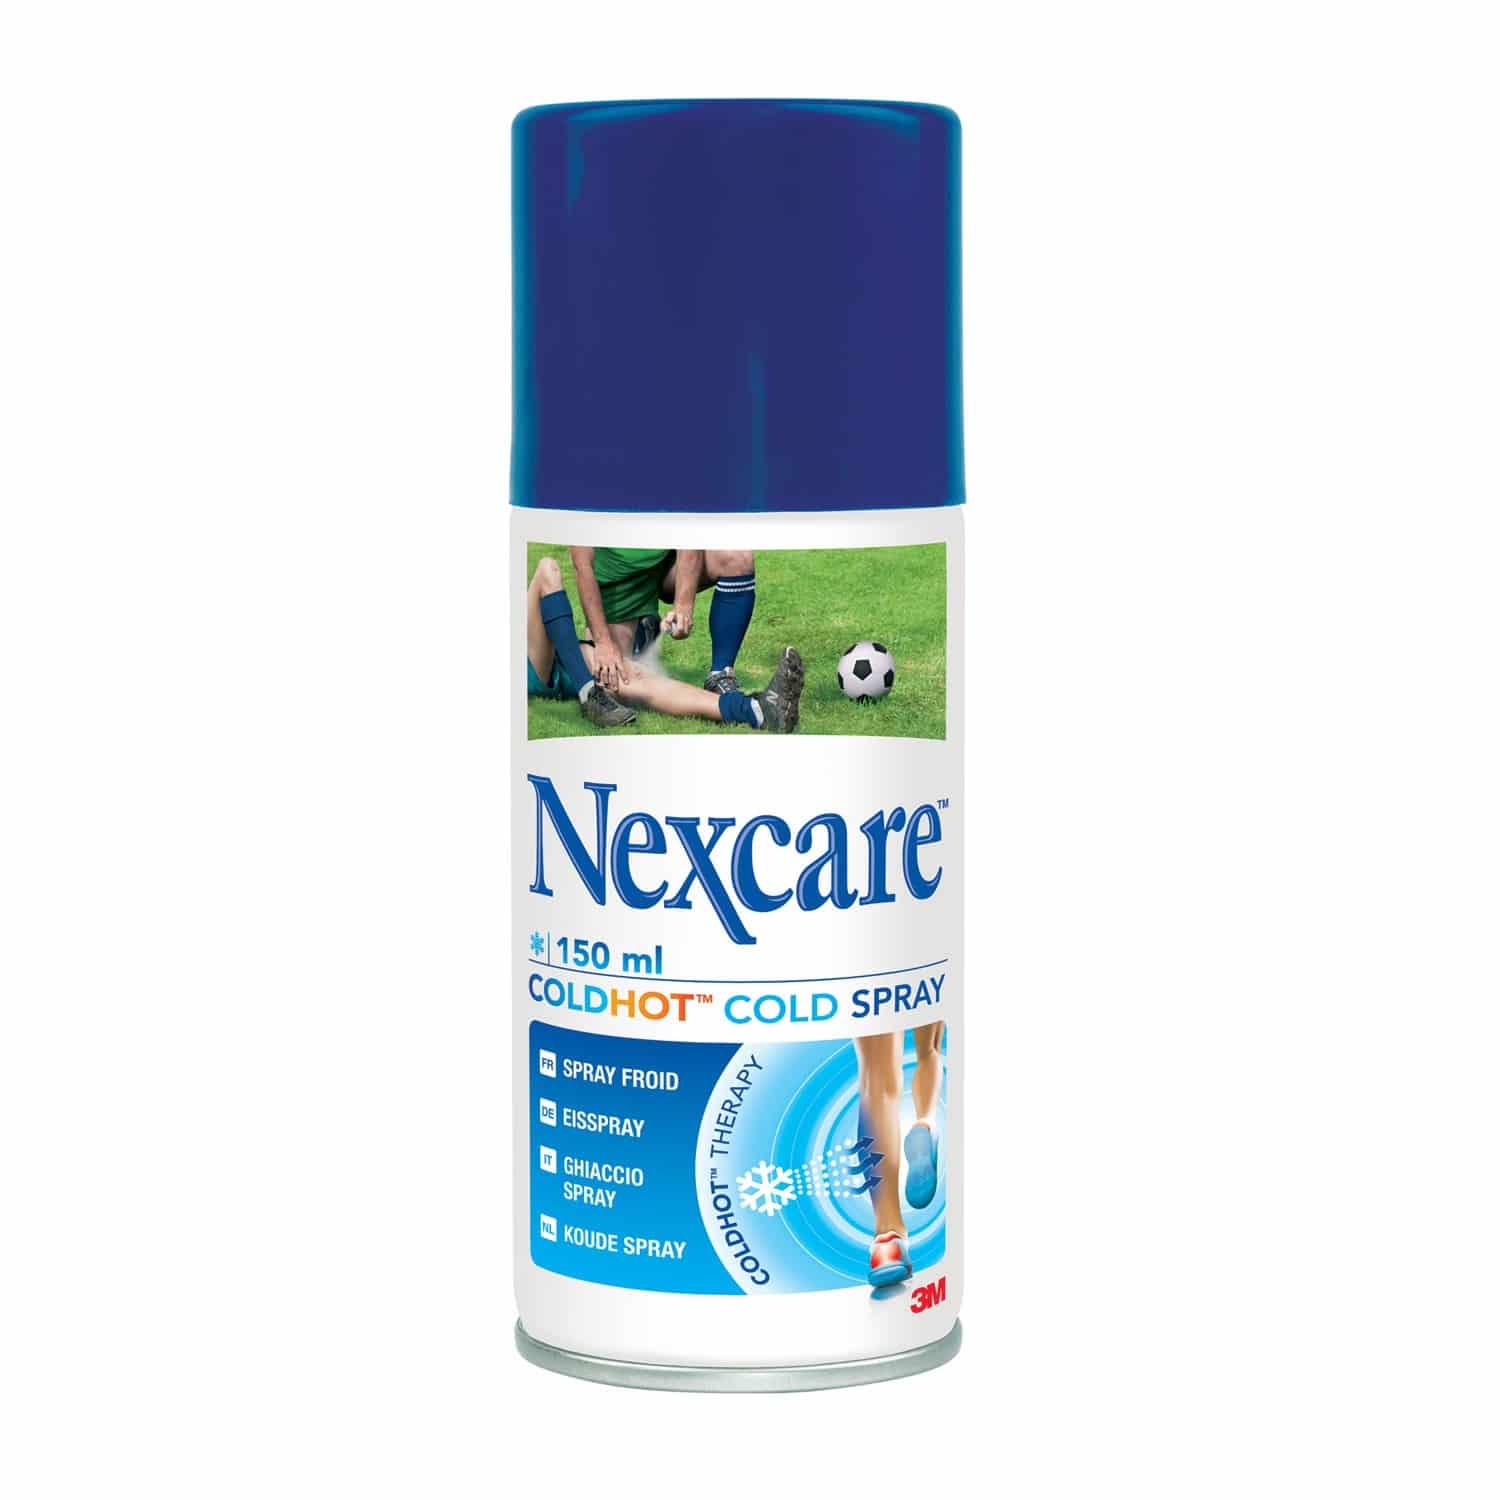 Nexcare Cold Hot Cold Spray